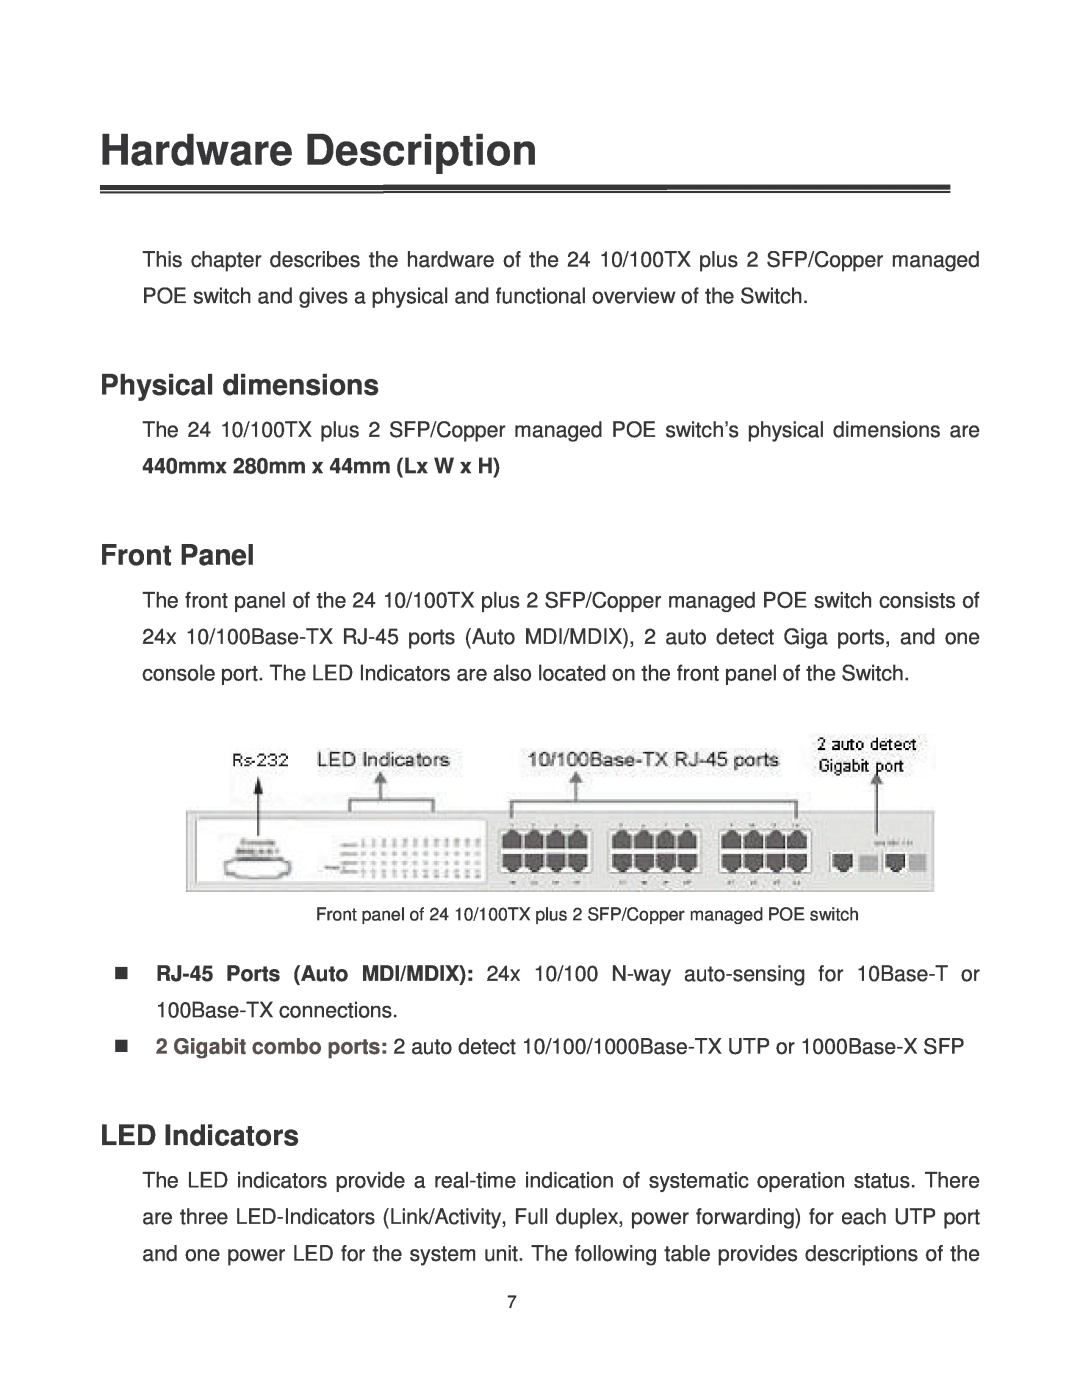 Transition Networks MIL-SM2401MAF manual Hardware Description, Physical dimensions, Front Panel, LED Indicators 